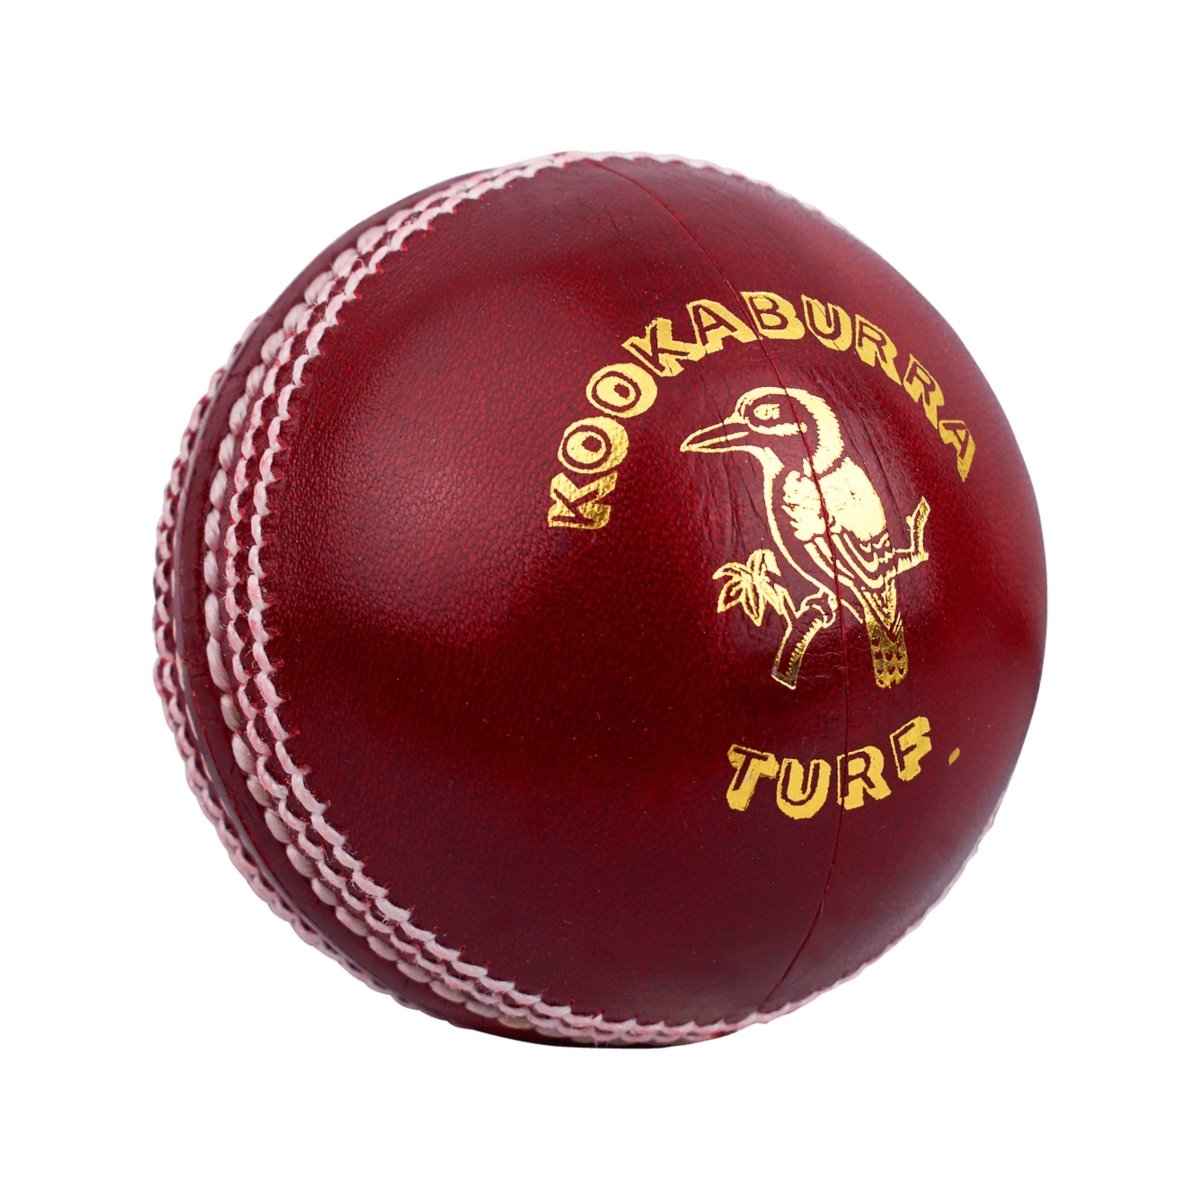 Kookaburra Turf Cricket Ball Pack of 12 - Acrux Sports